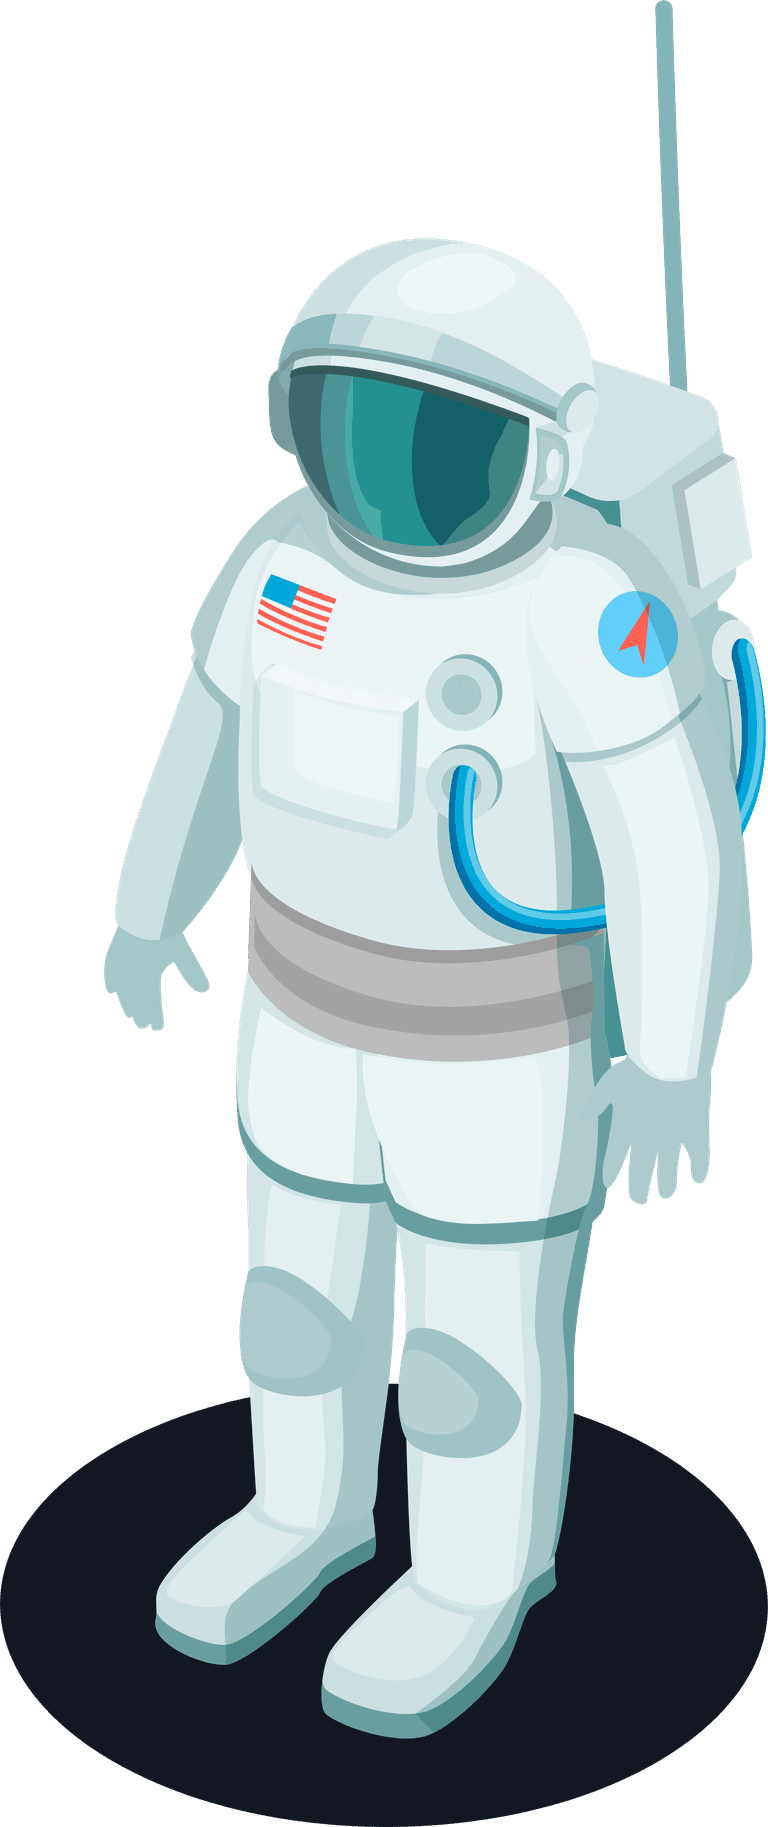 astronaut astronauts isometric characters set